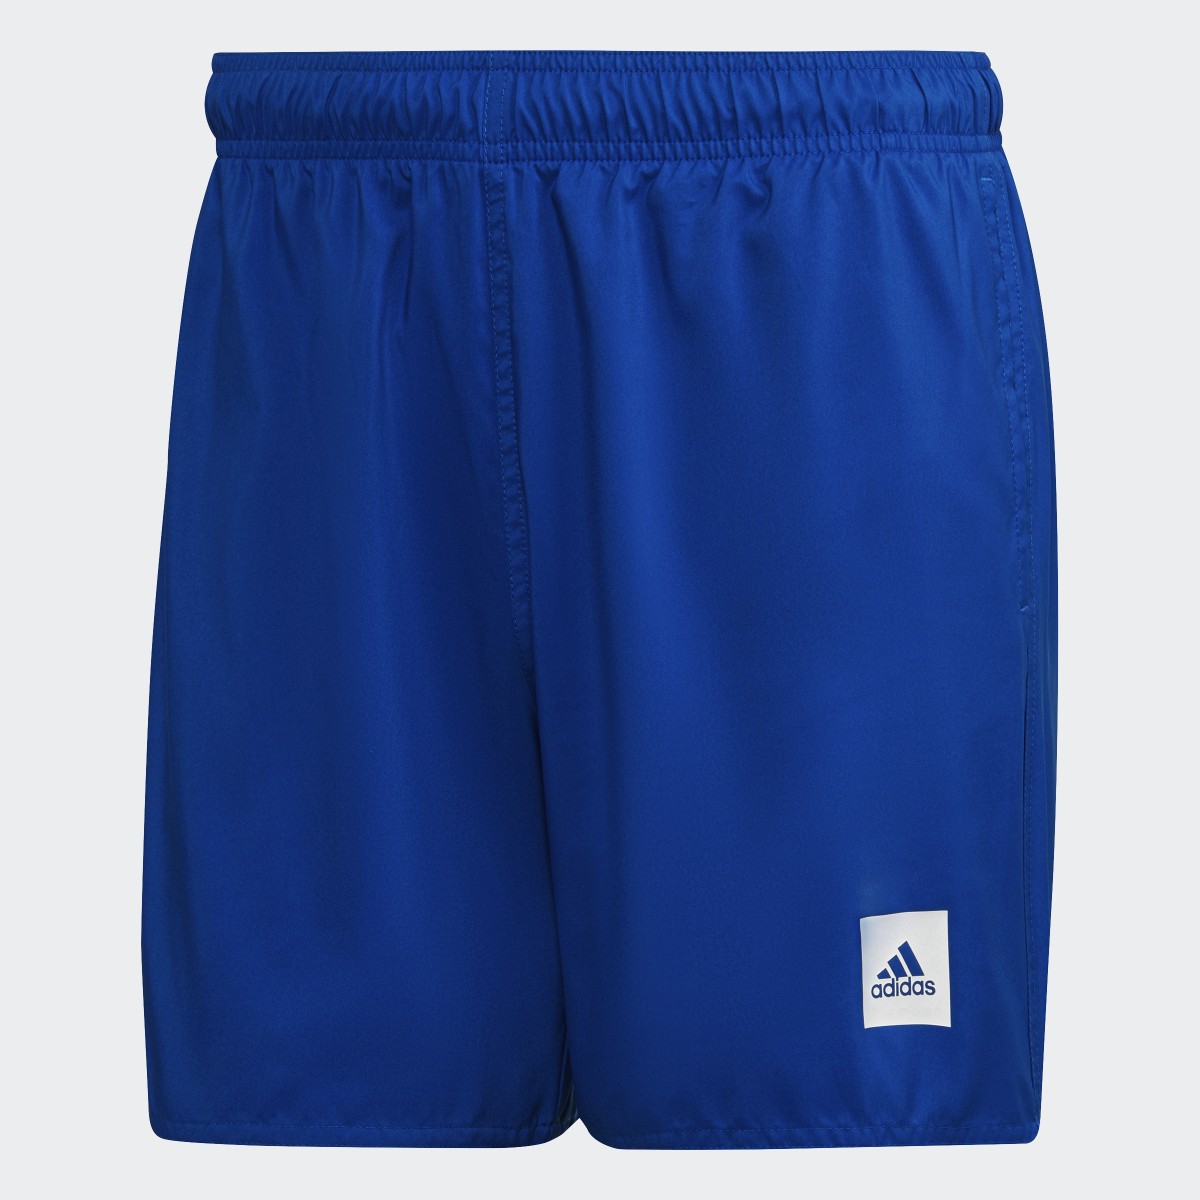 Adidas Short Length Solid Swim Shorts. 4